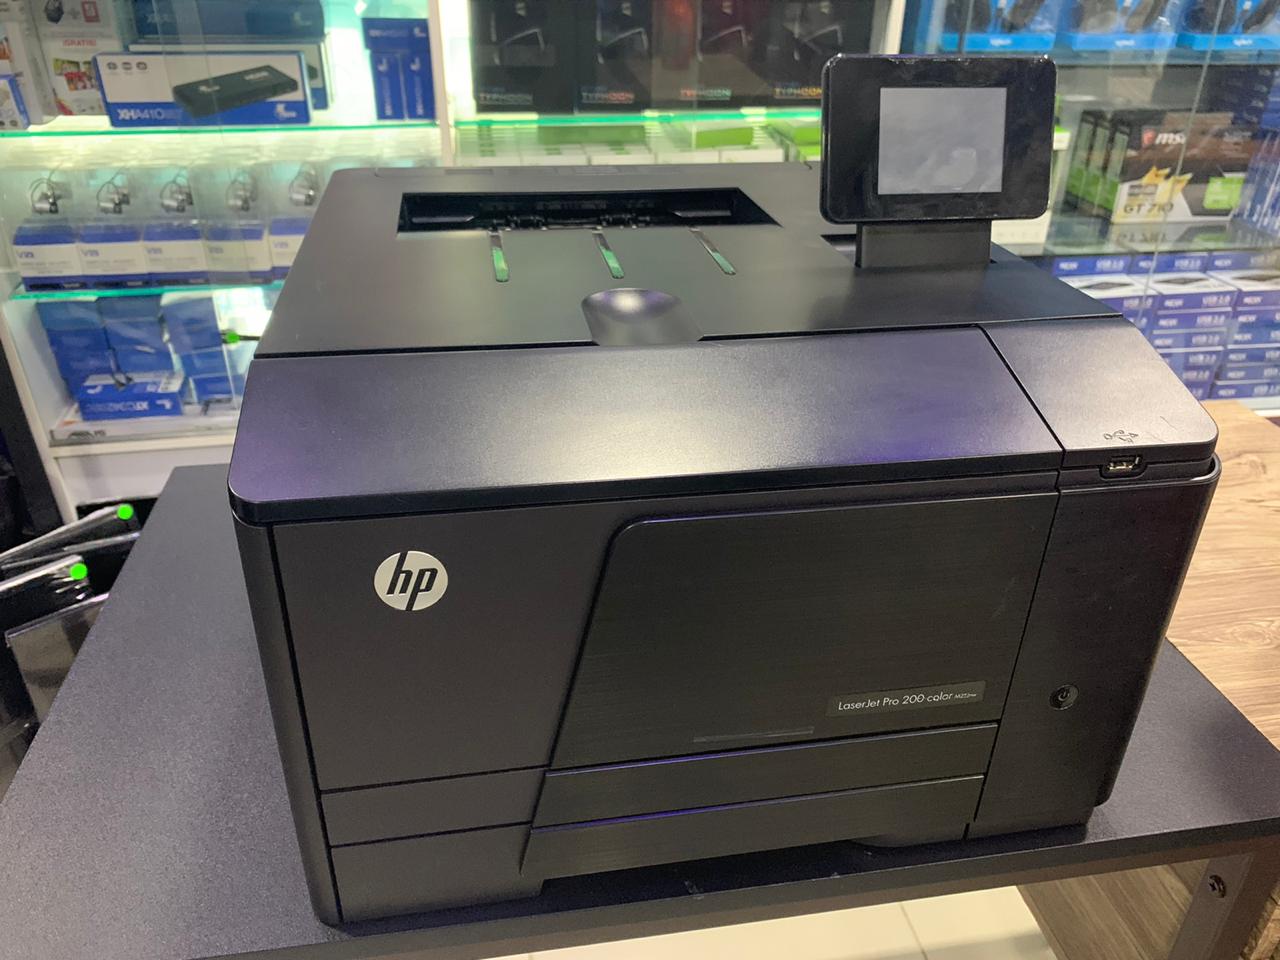 impresoras y scanners - Impresora a color inalámbrica HP LaserJet Pro 200 M251nw 